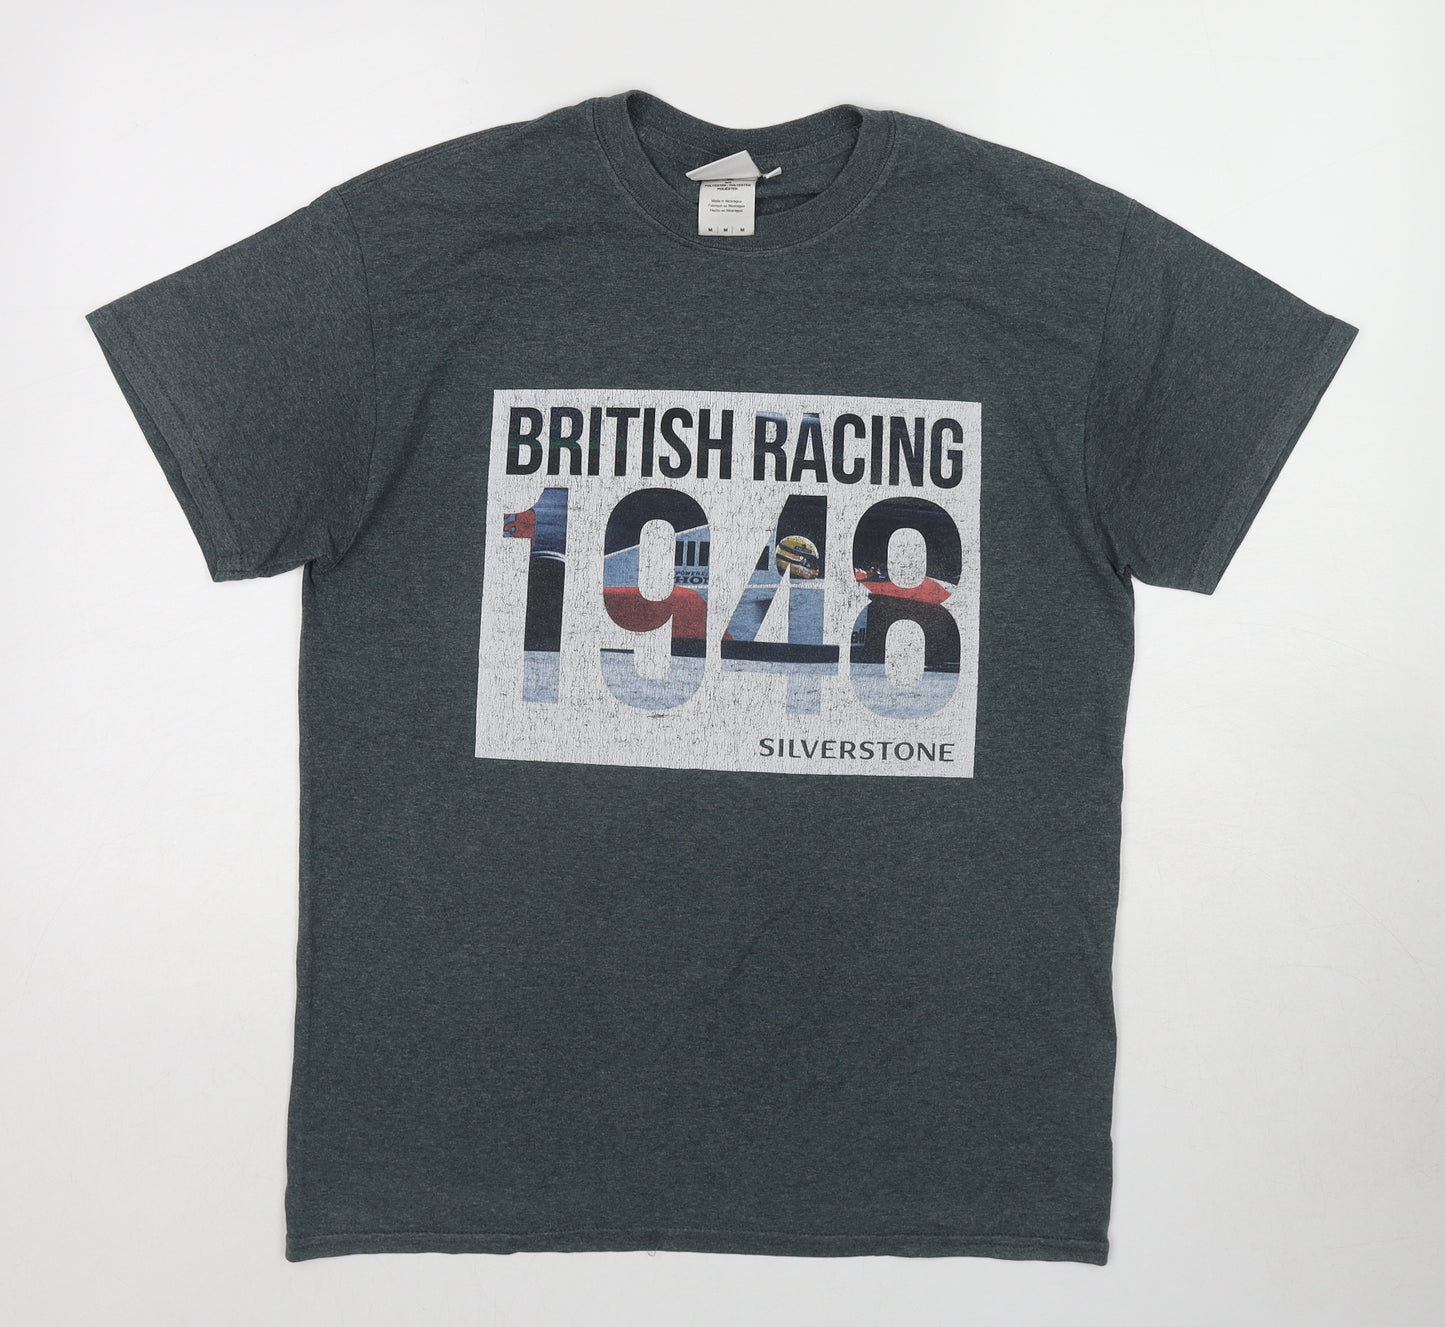 Silverstone Mens Grey Cotton T-Shirt Size M Round Neck - British Racing 1948